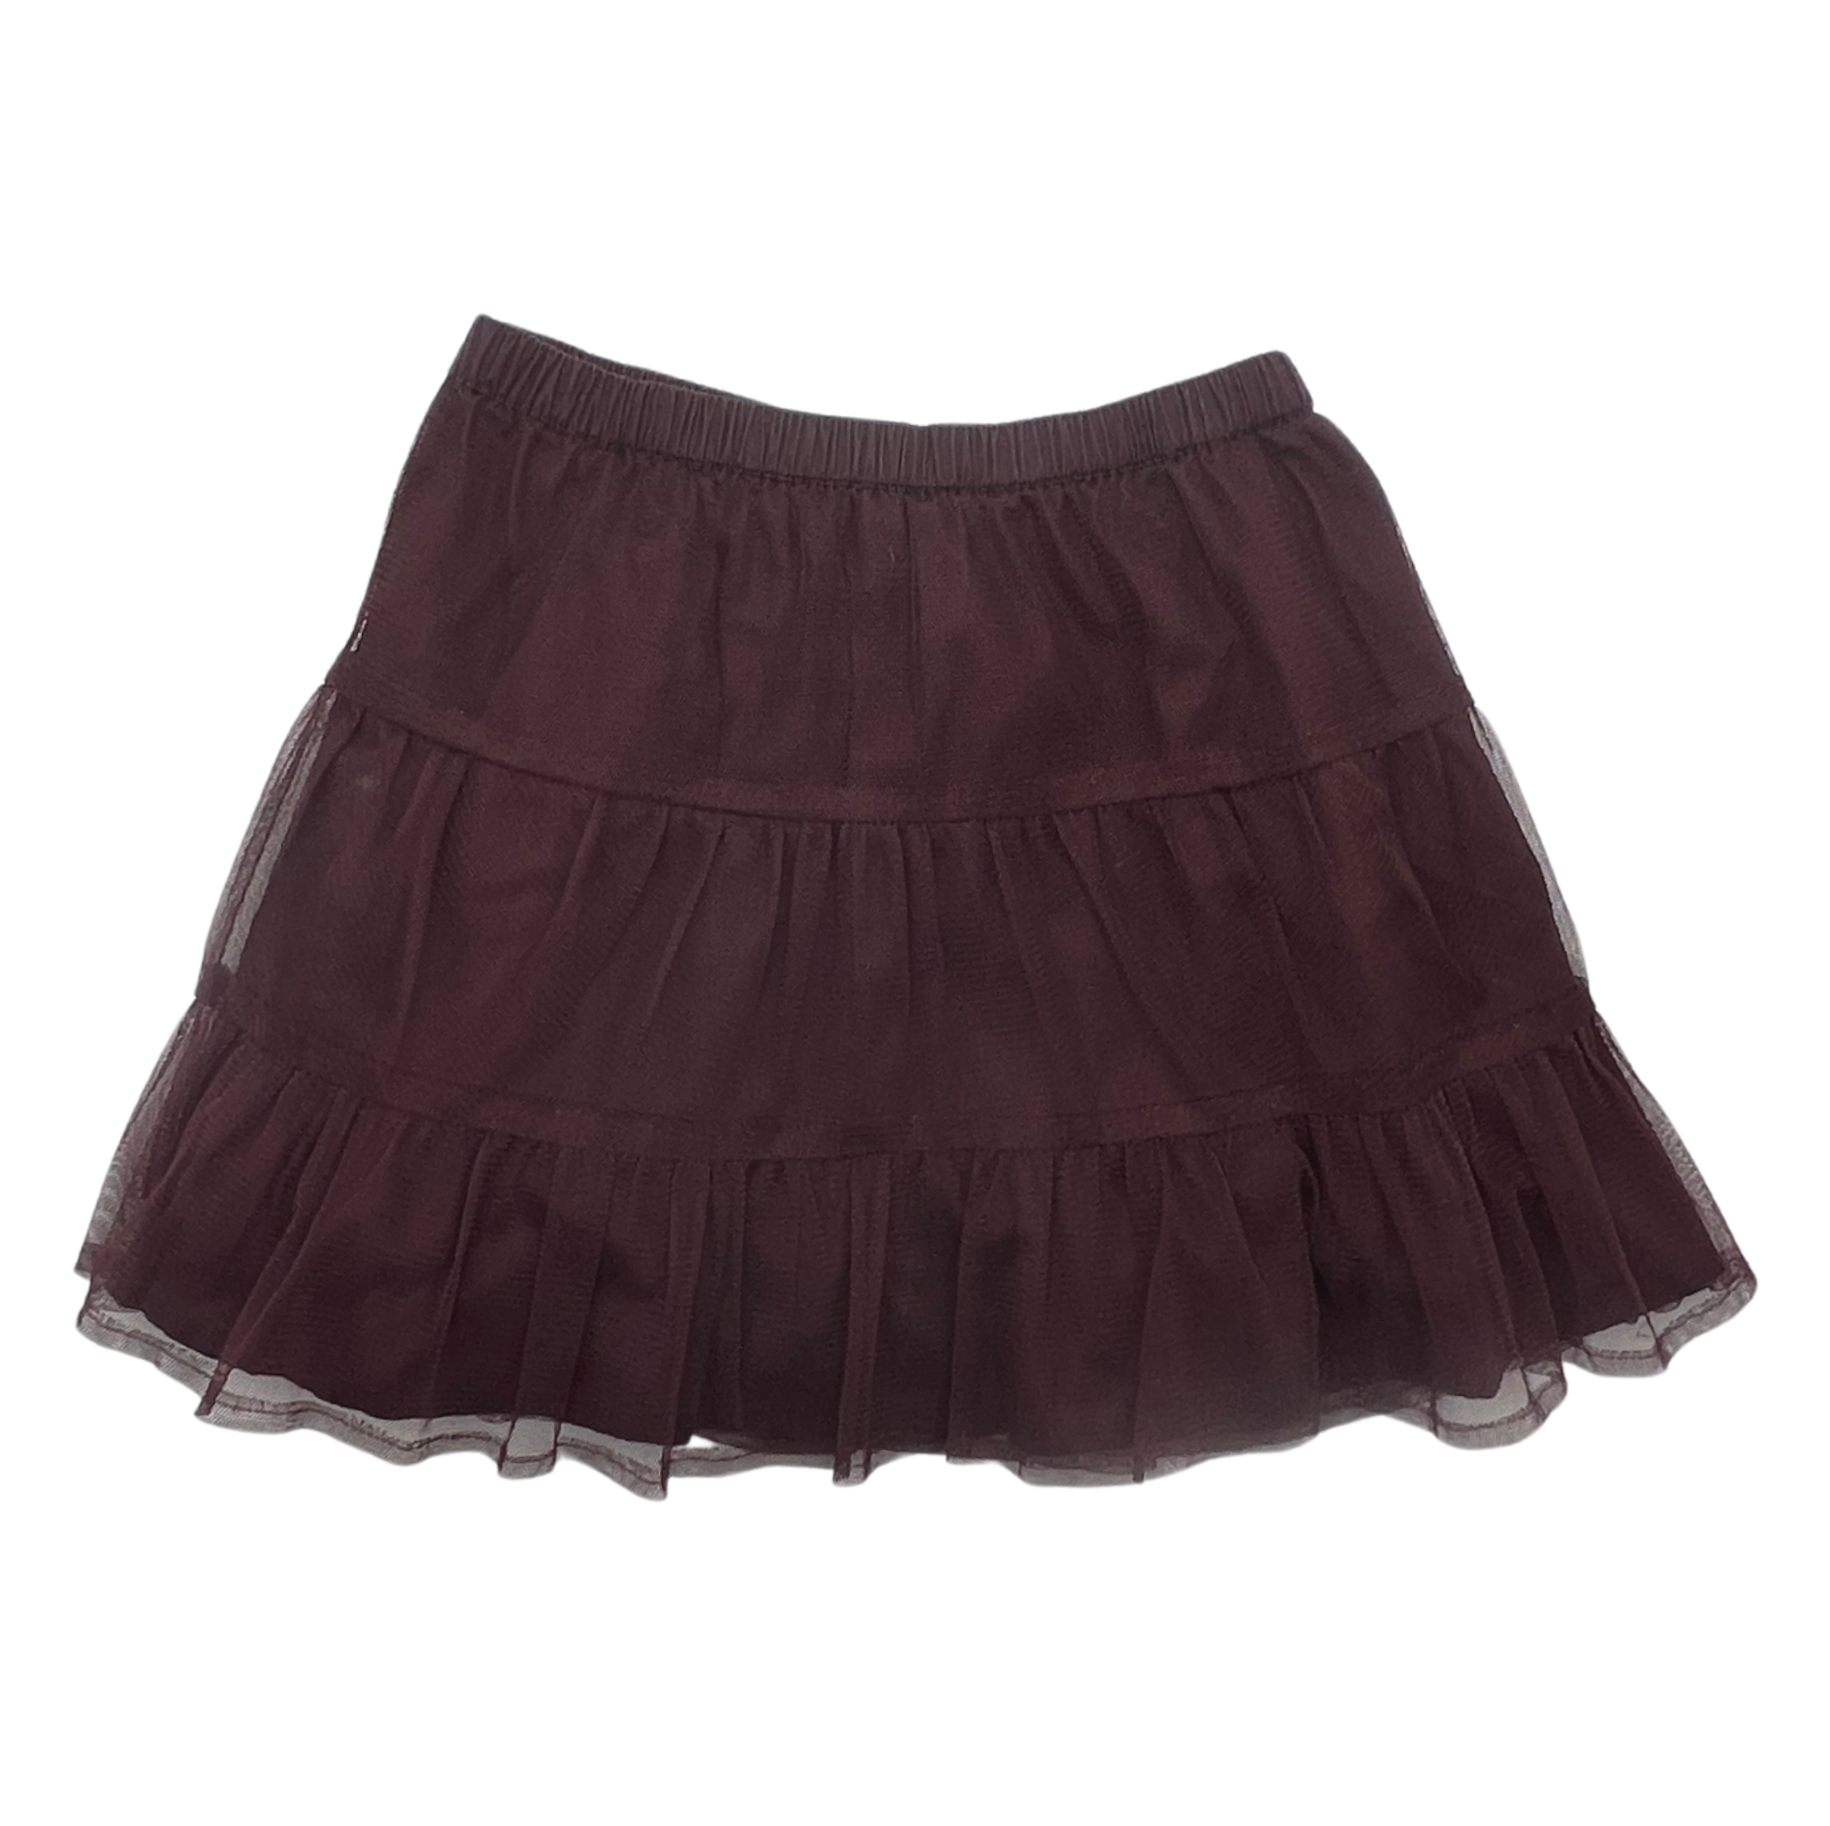 JACADI - Burgundy tulle skirt - 4 years old